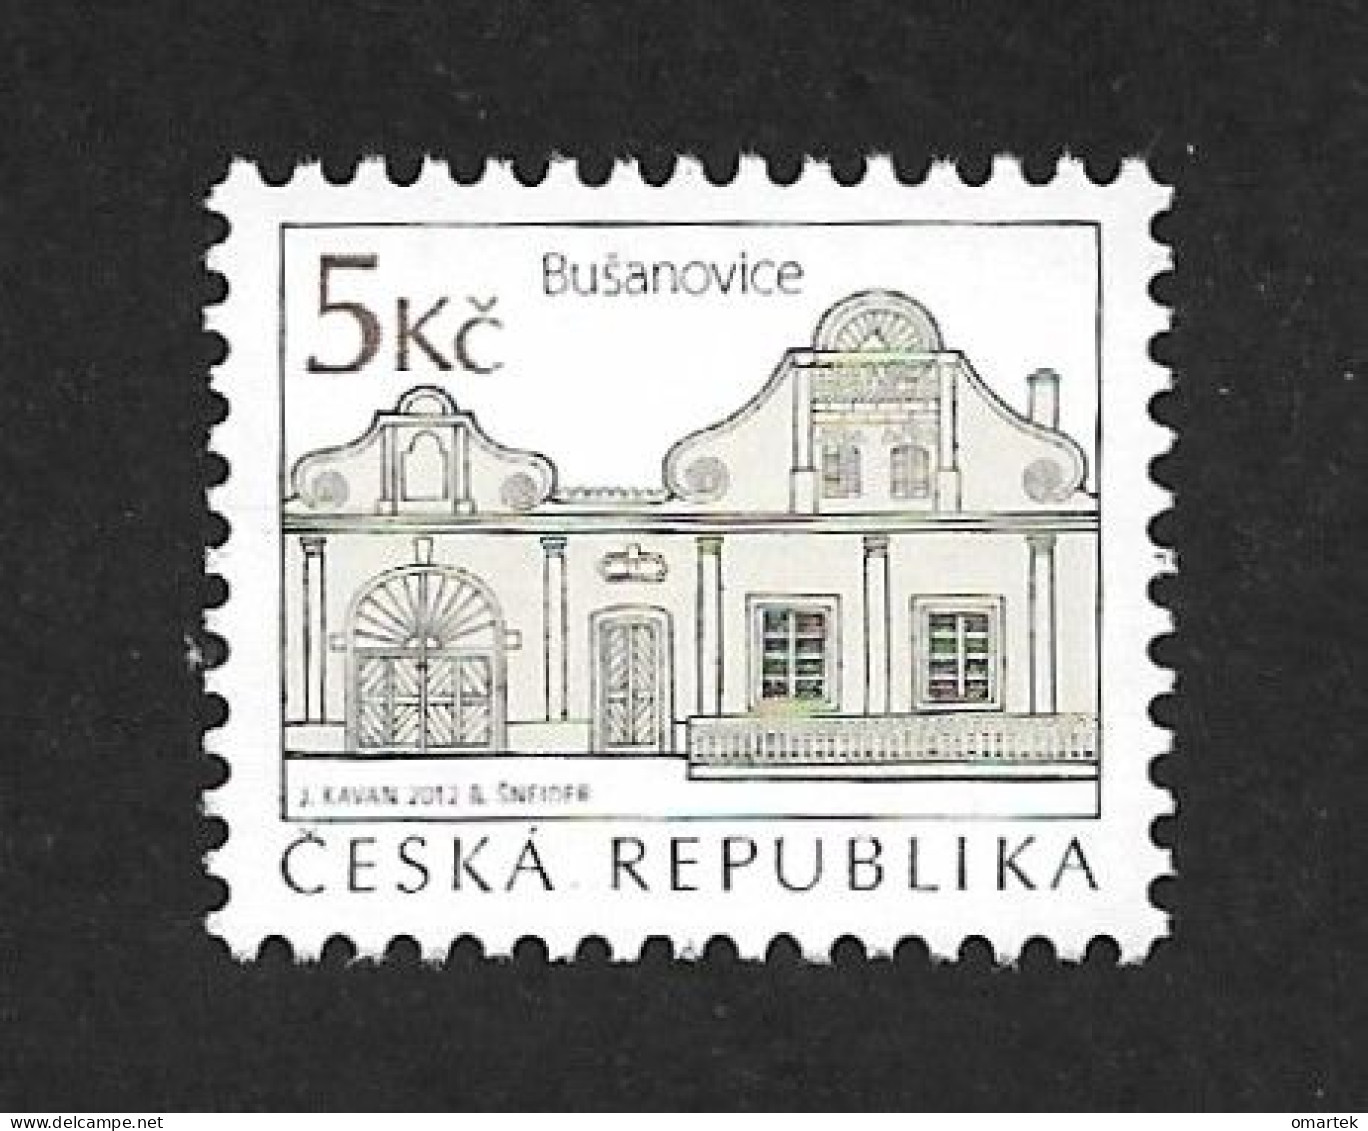 Czech Republic 2012 MNH ** Mi 753 Sc 3558 Folk Architecture - Busanovice.Tschechische Republik - Nuevos